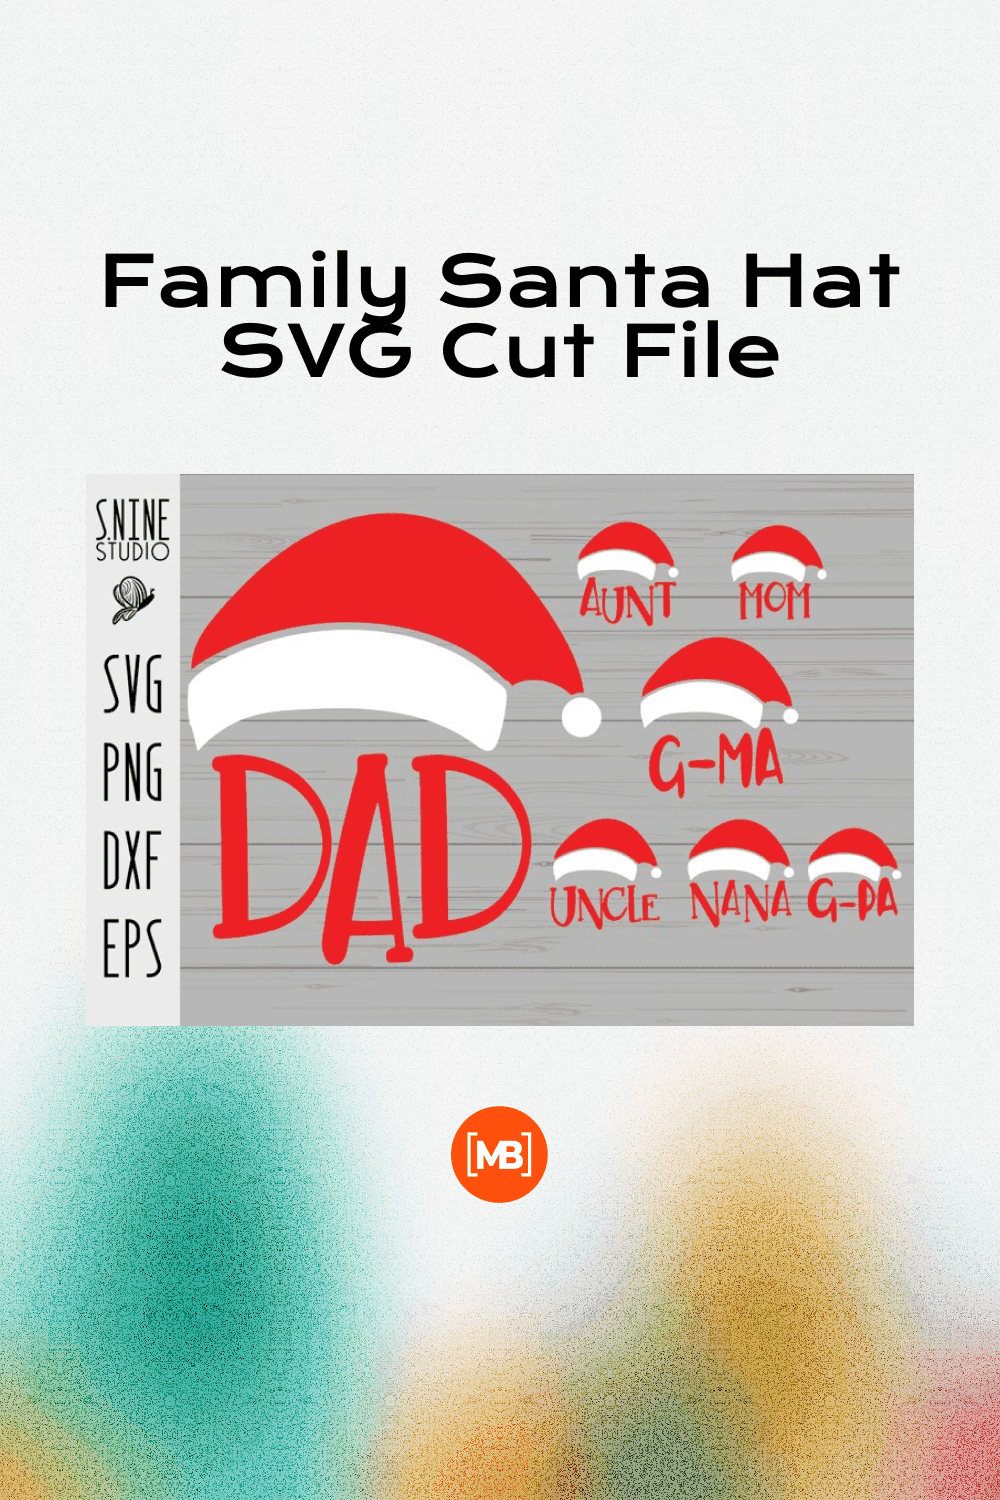 Family Santa Hat SVG Cut File.